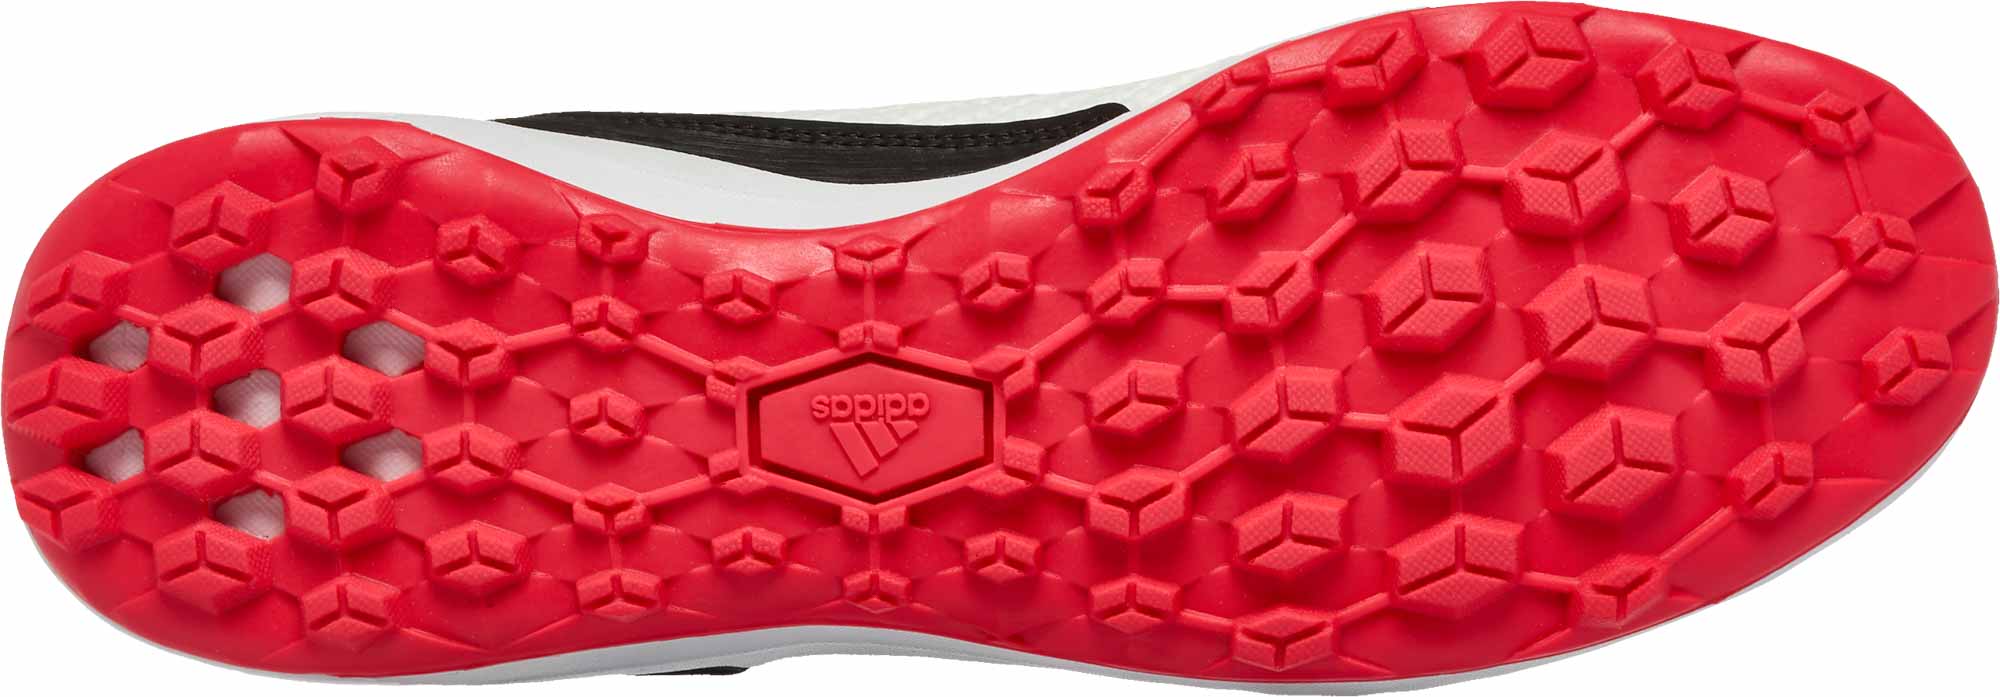 adidas Predator Tango 18.3 TF - White Turf Soccer Shoes